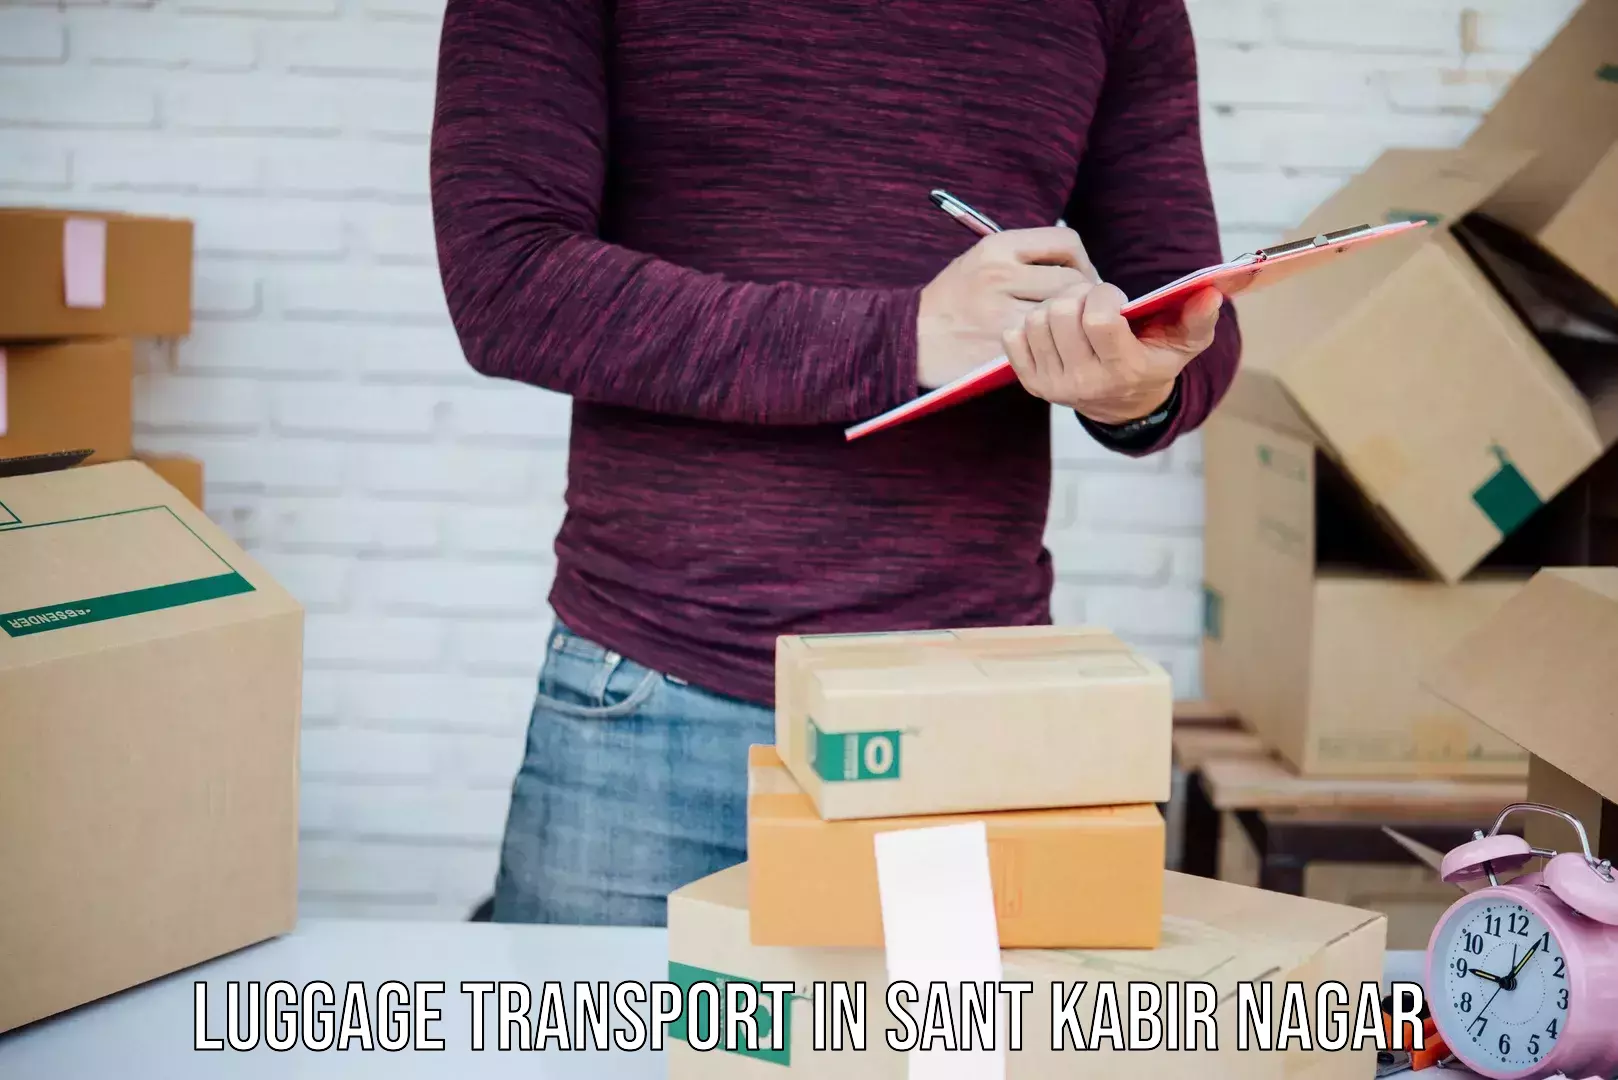 Luggage shipment tracking in Sant Kabir Nagar